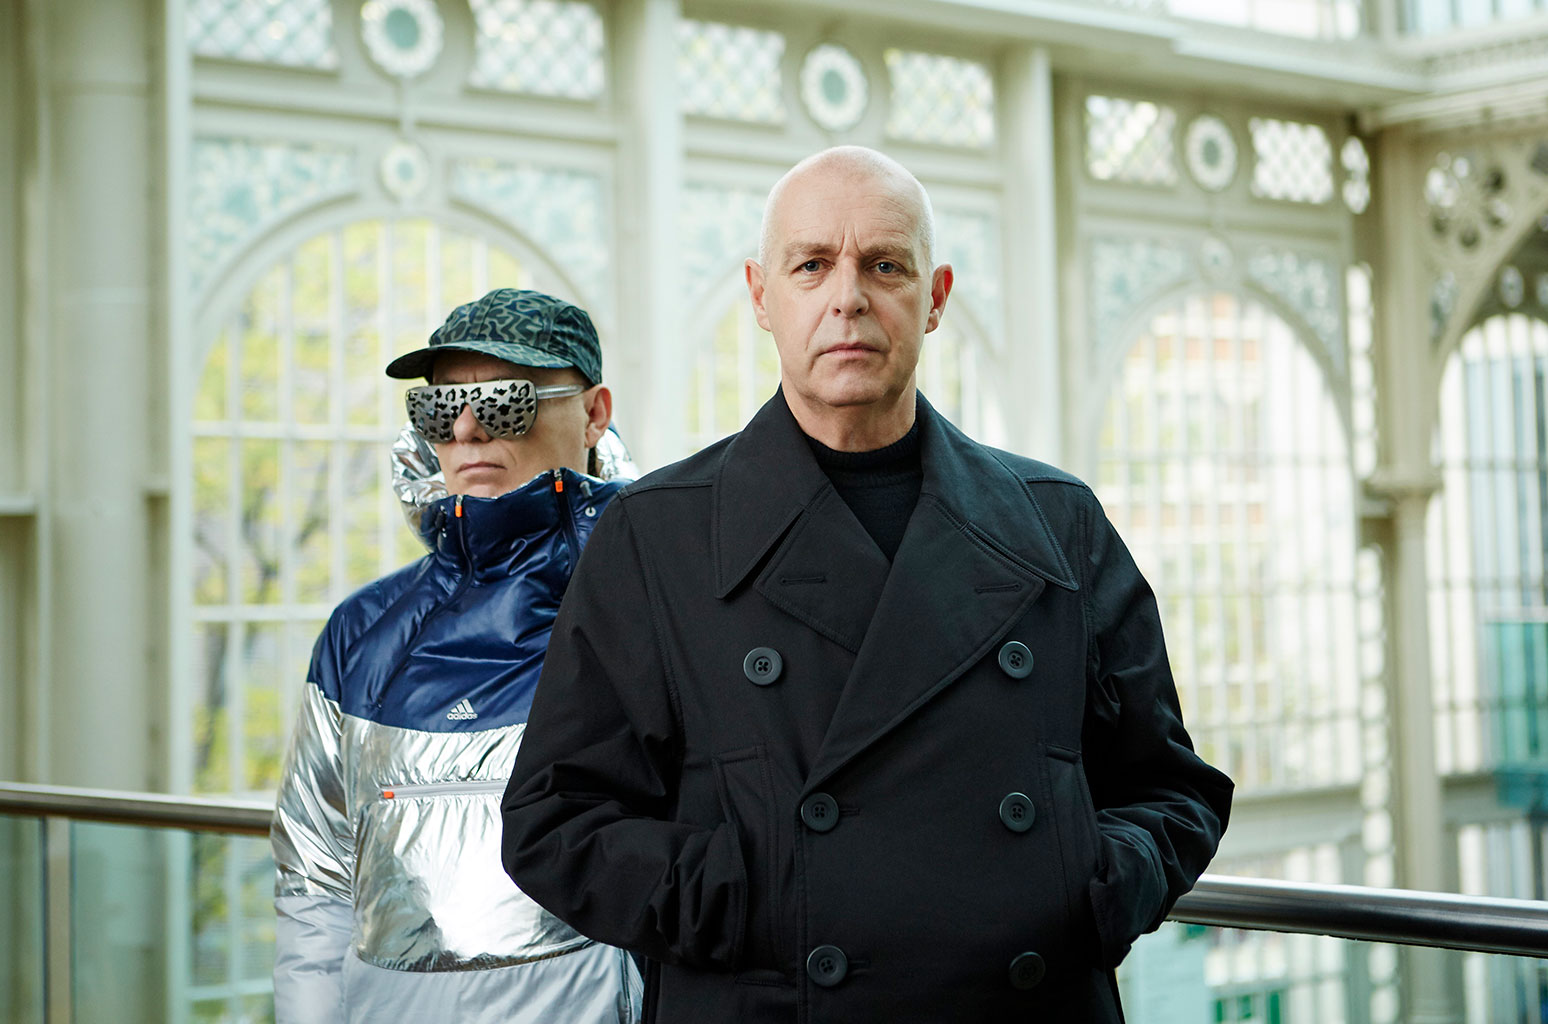 Pet Shop Boys Preview 'Hotspot' Album With Latest Dance Club Songs Top 10 - www.billboard.com